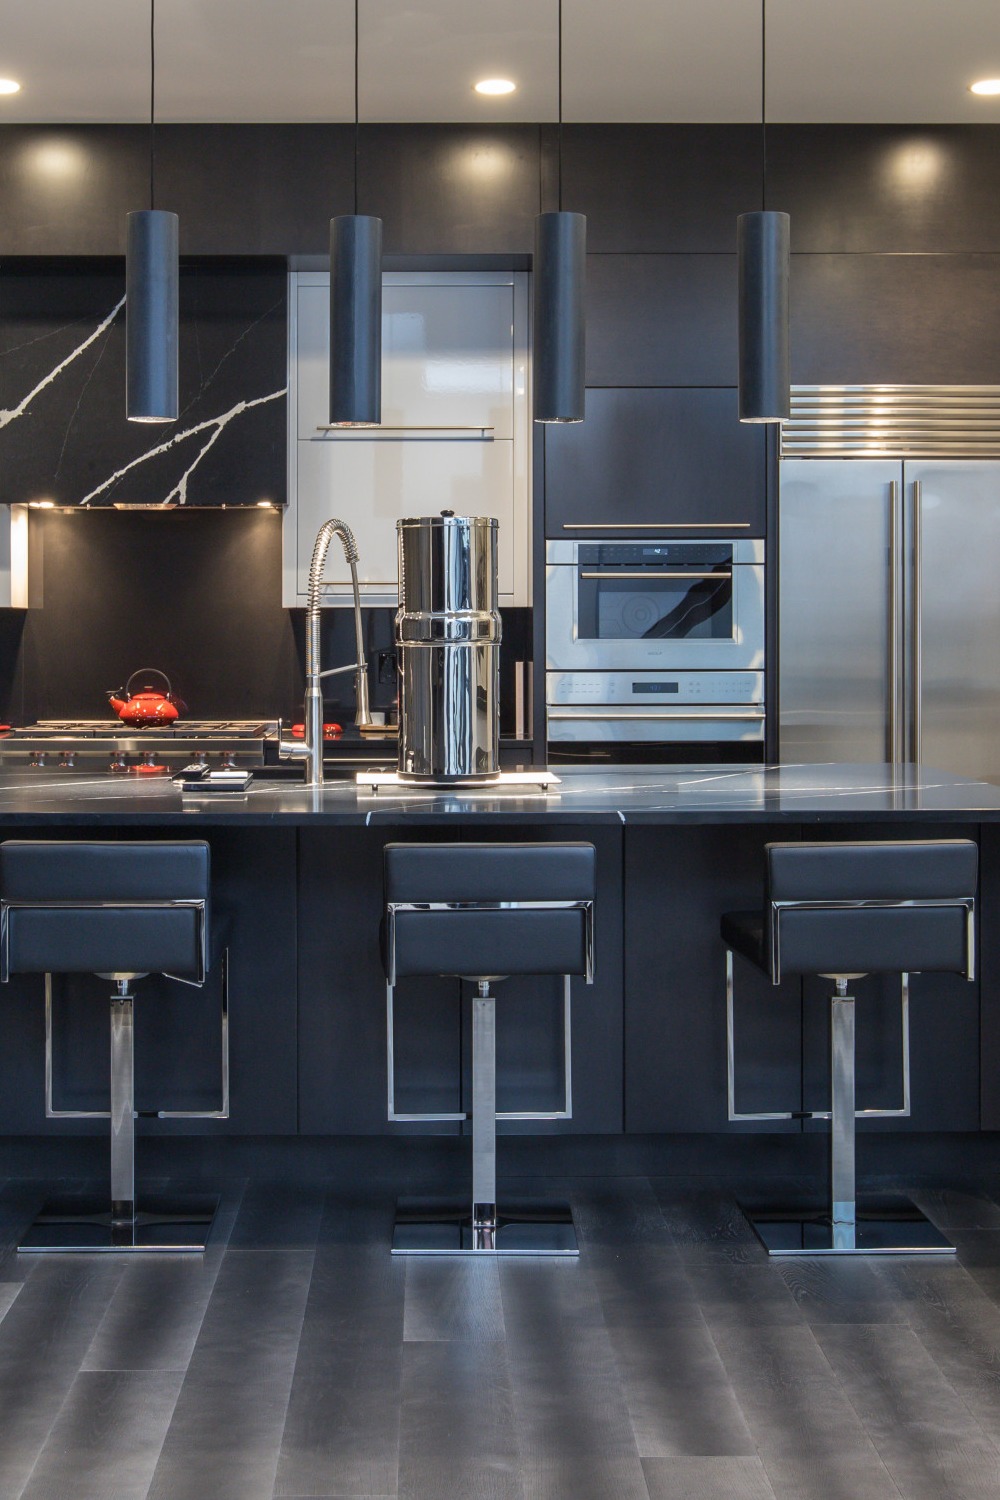 Contemporary Kitchen With Black Cabinets Lighting Black Backsplash Island Countertop Walls Create Stand